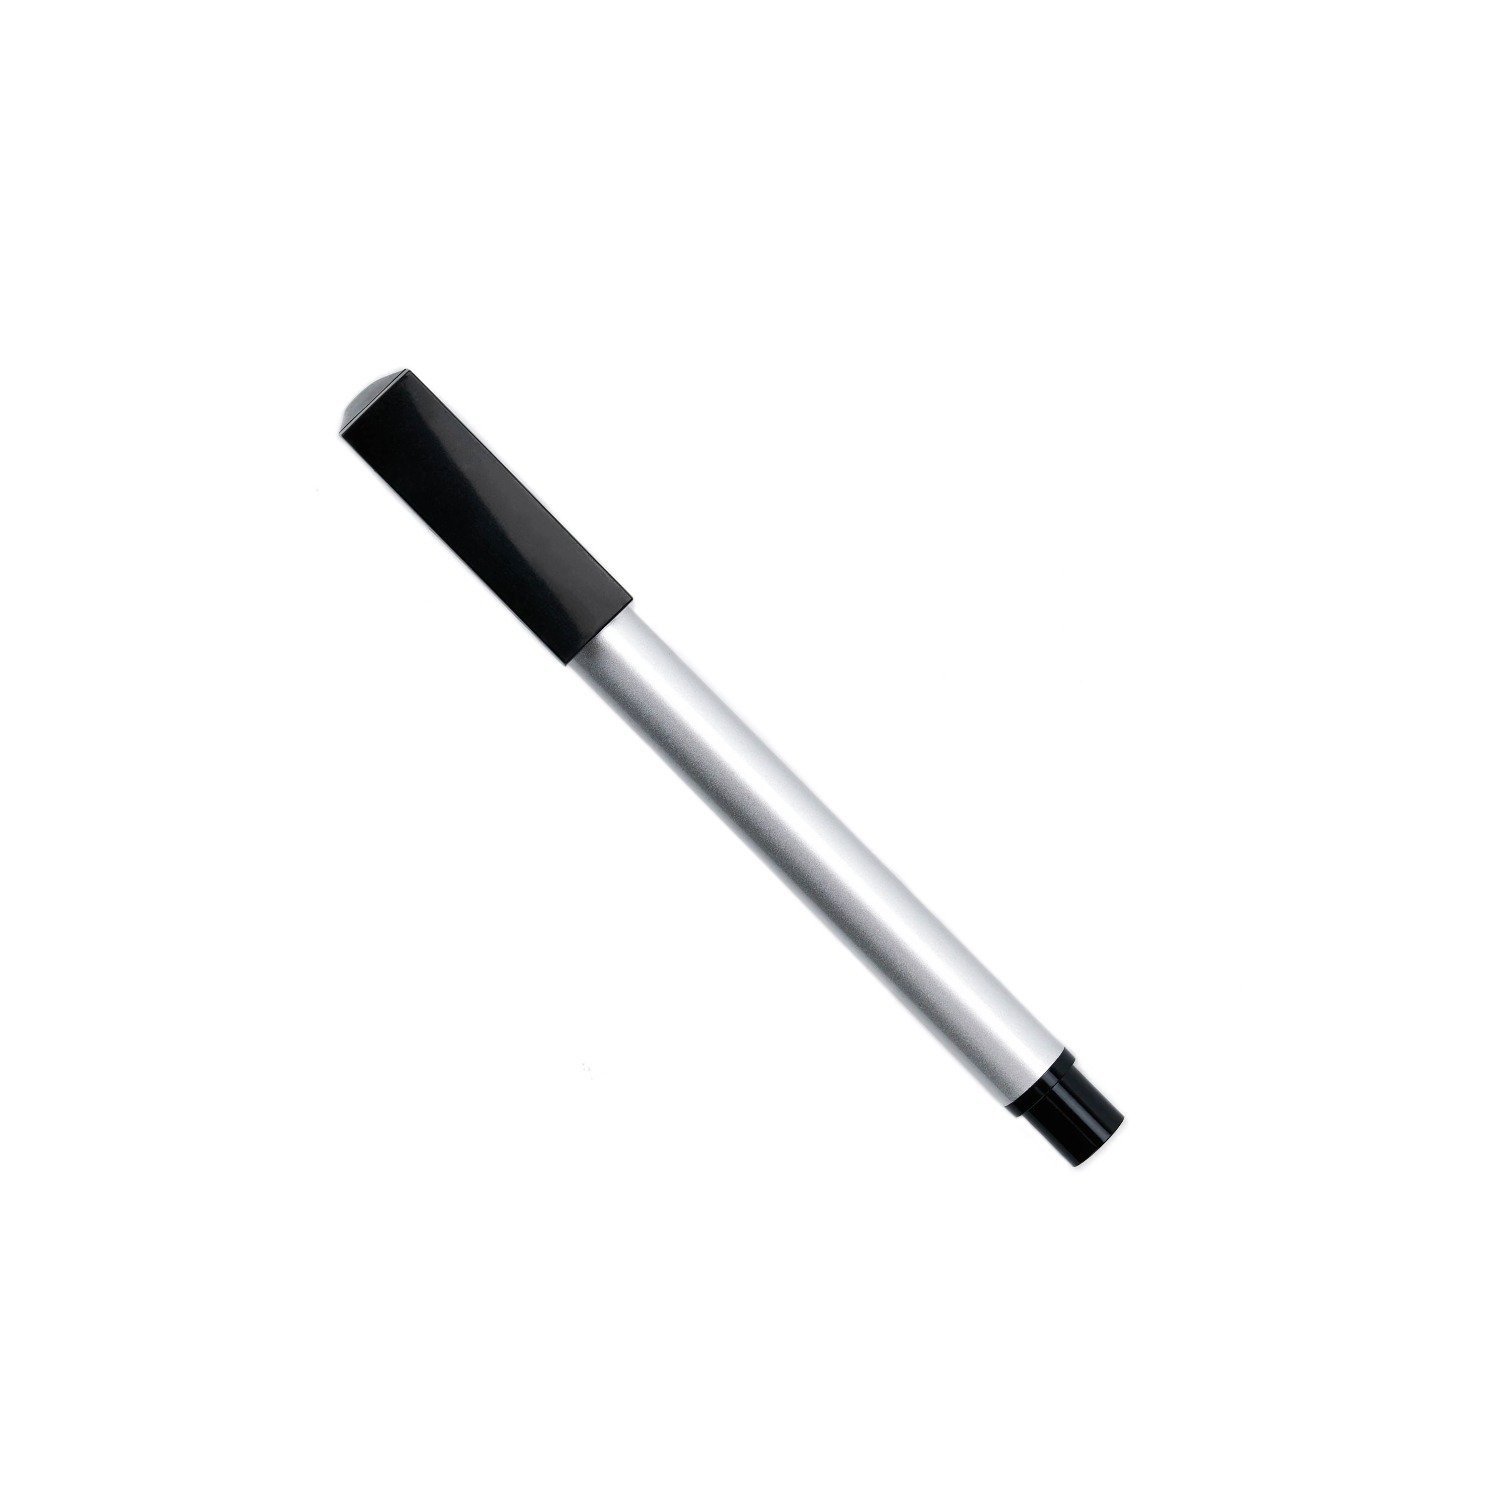 UP-08 Pen Flash Drive แฟลชไดร์ฟปากกา